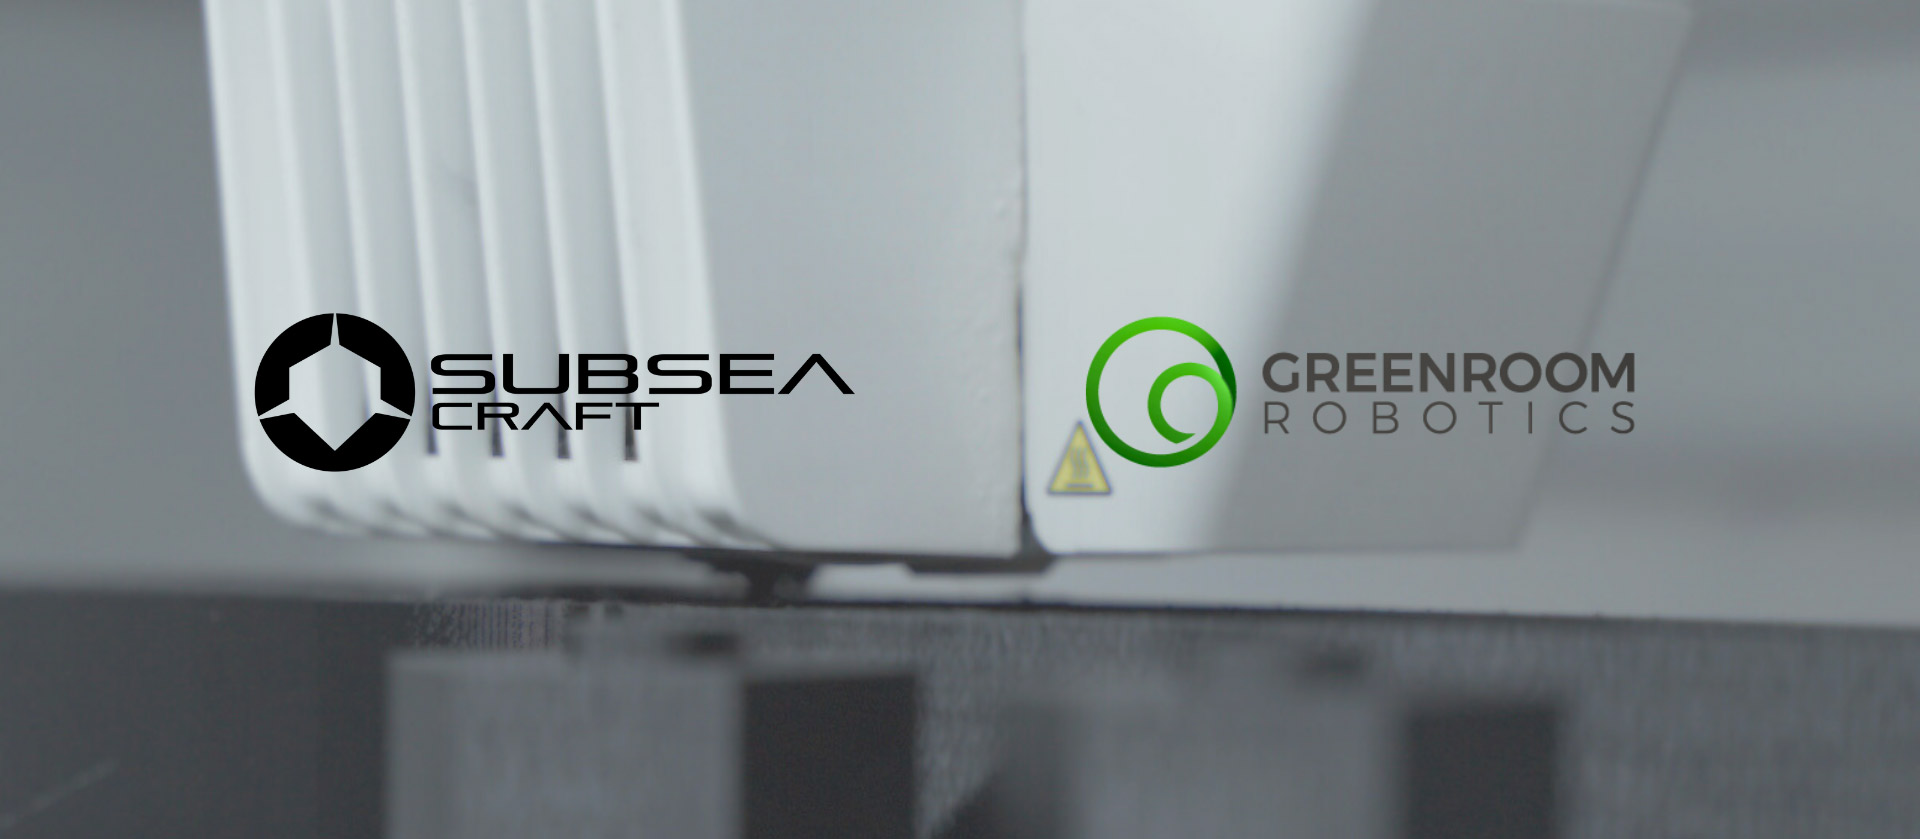 SubSea Craft and Greenroom Robotics Announce Strategic Collaboration